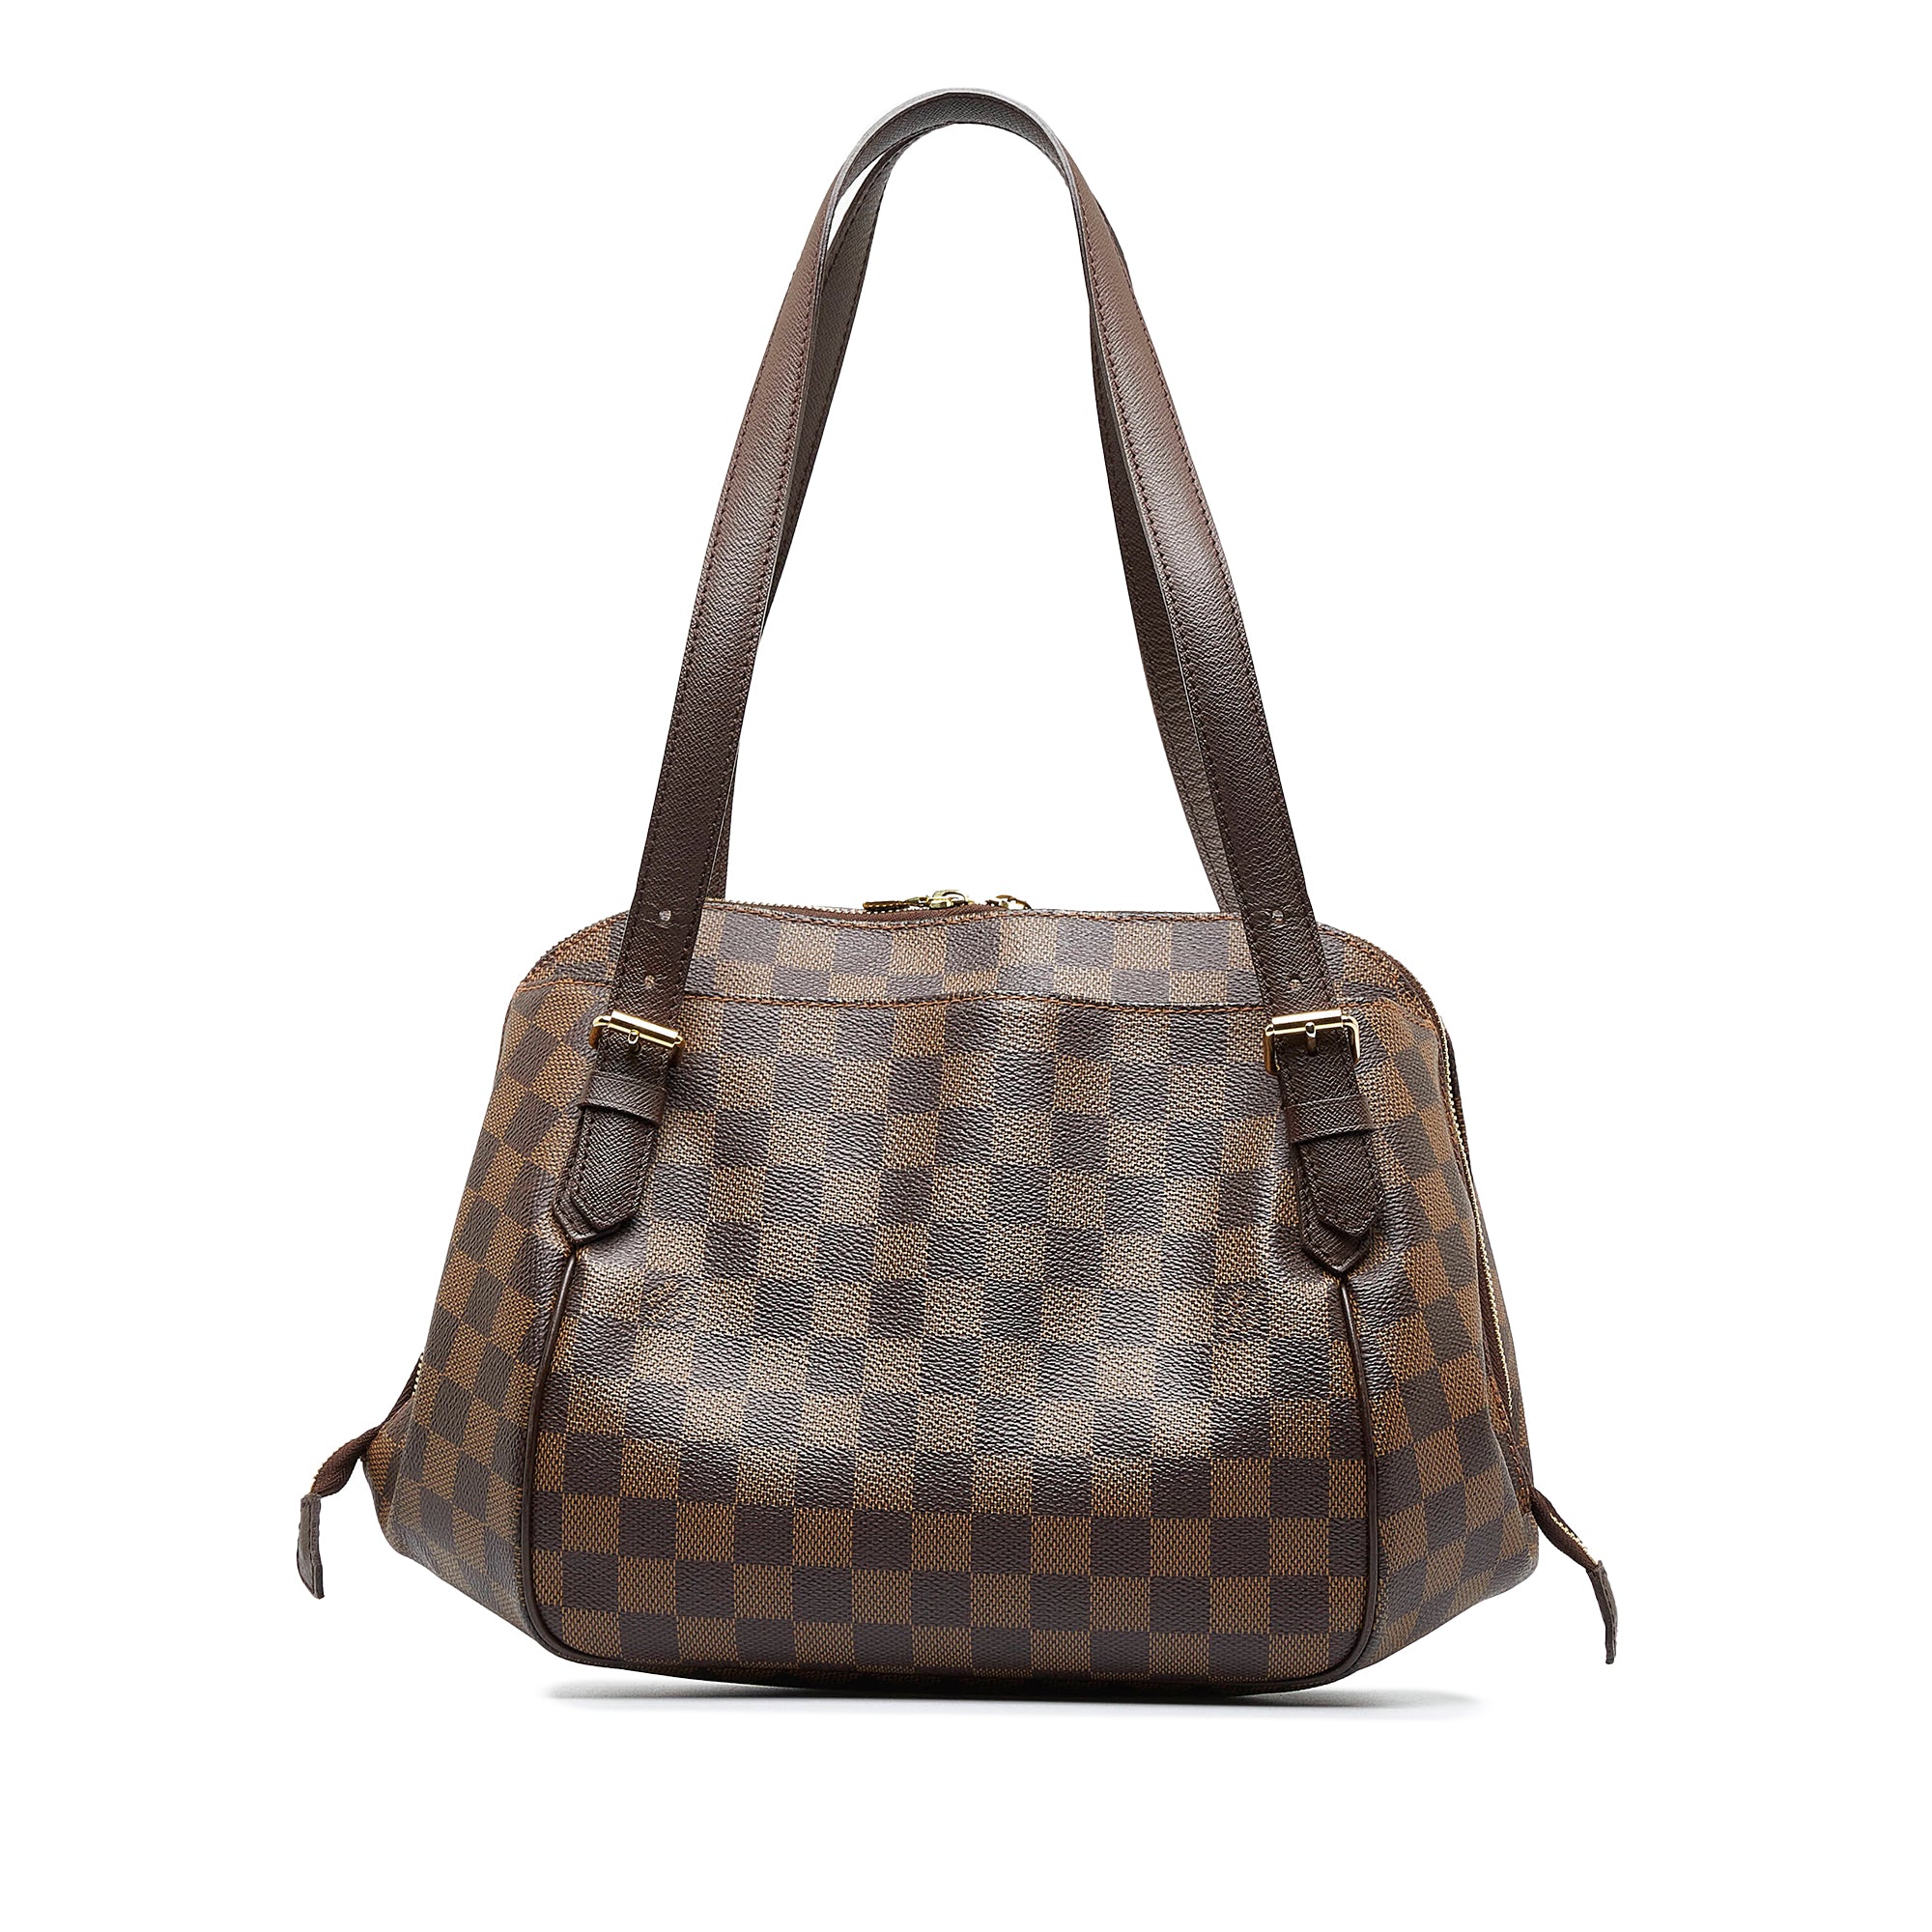 Louis Vuitton Belem PM Handbag in Damier Canvas - Handbags & Purses -  Costume & Dressing Accessories